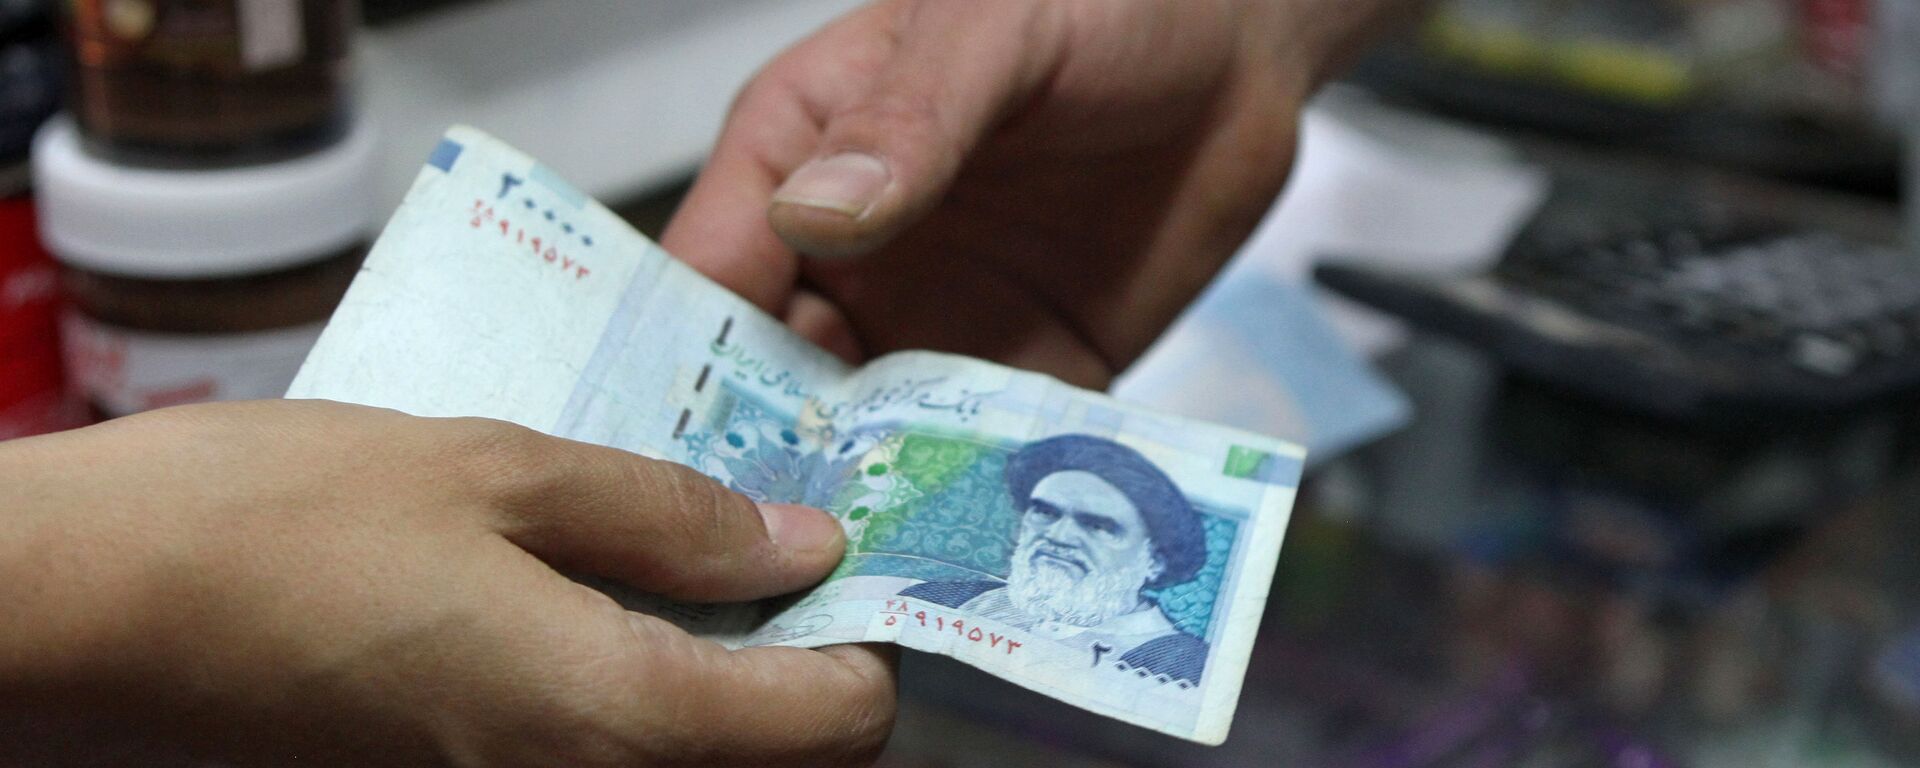 20000 rial banknote bearing a portrait of Iran's late founder of islamic Republic Ayatollah Ruhollah Khomeini - Sputnik International, 1920, 25.09.2019